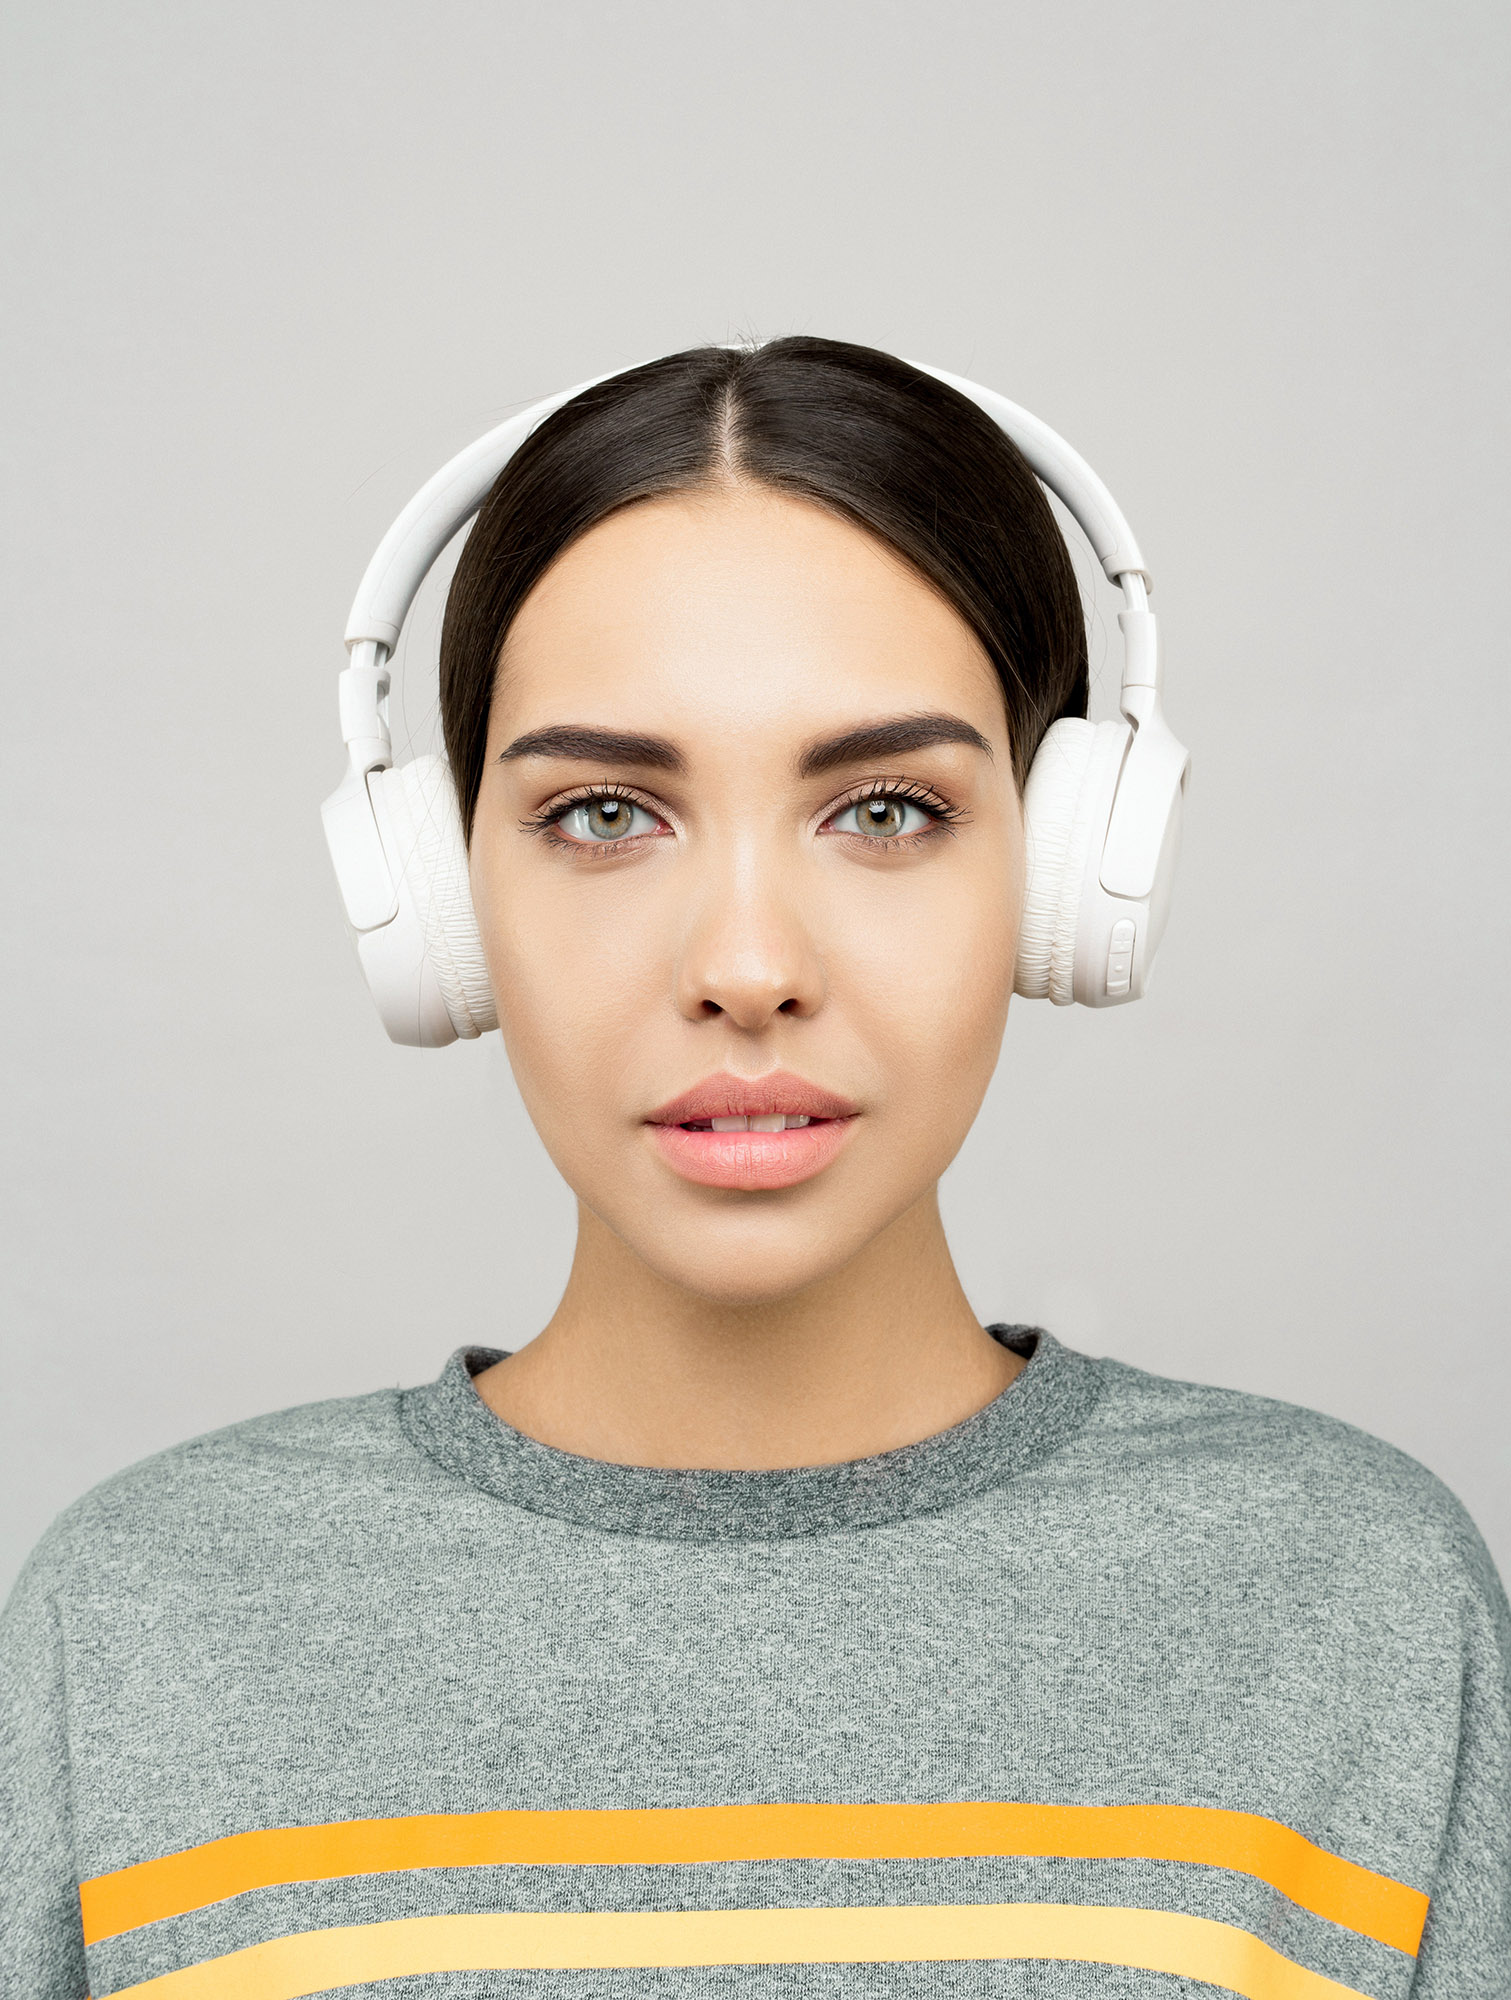 girl-with-headphones-before-1500x